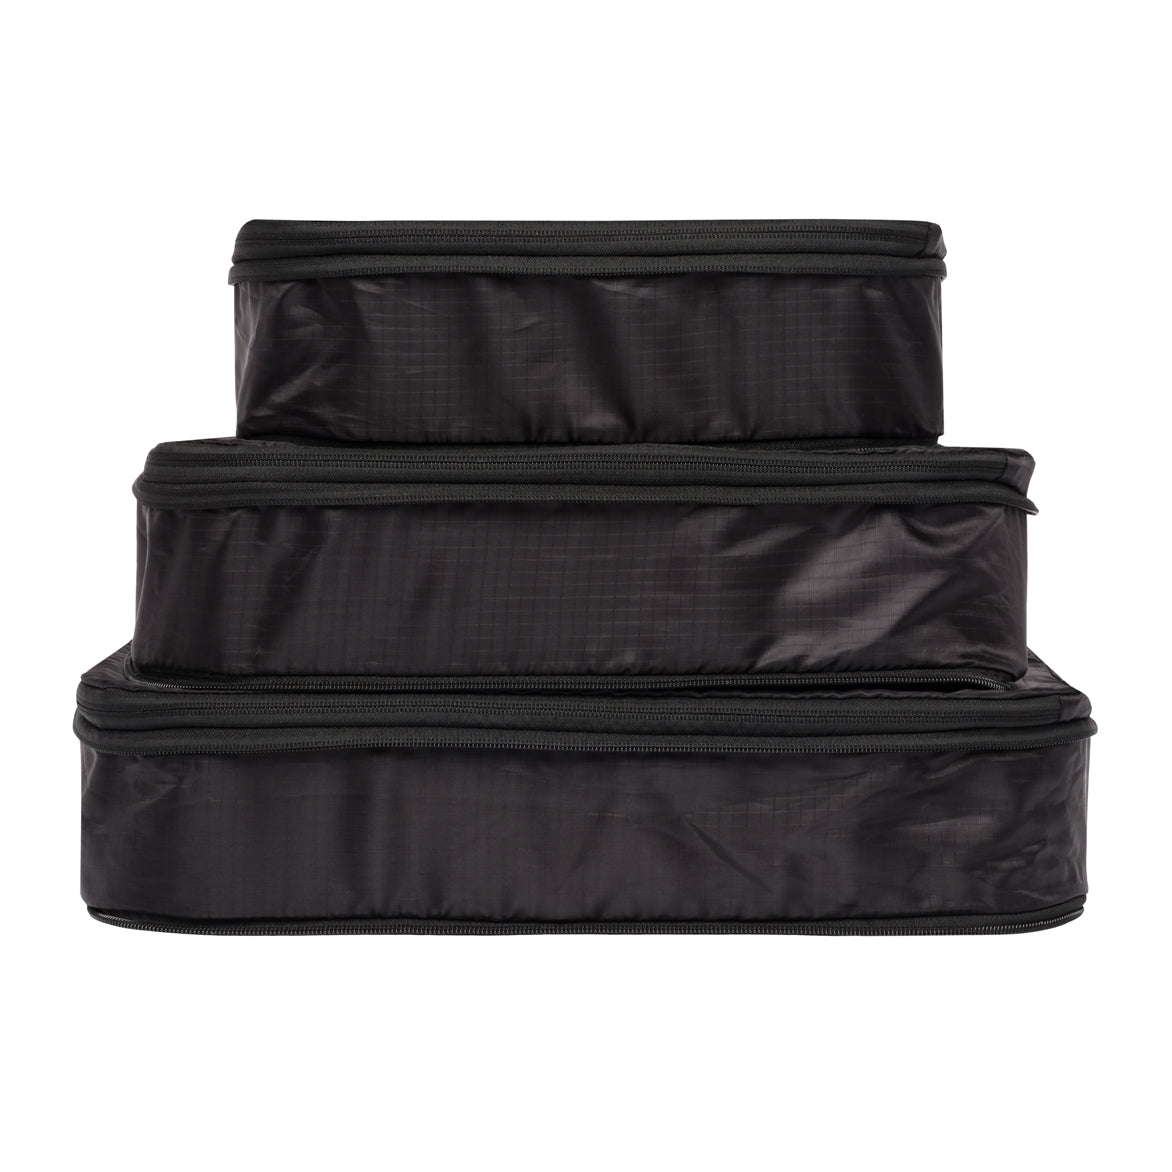 Bag-all Basic Compression Packing Cubes, 3-pack Black - Bag-all